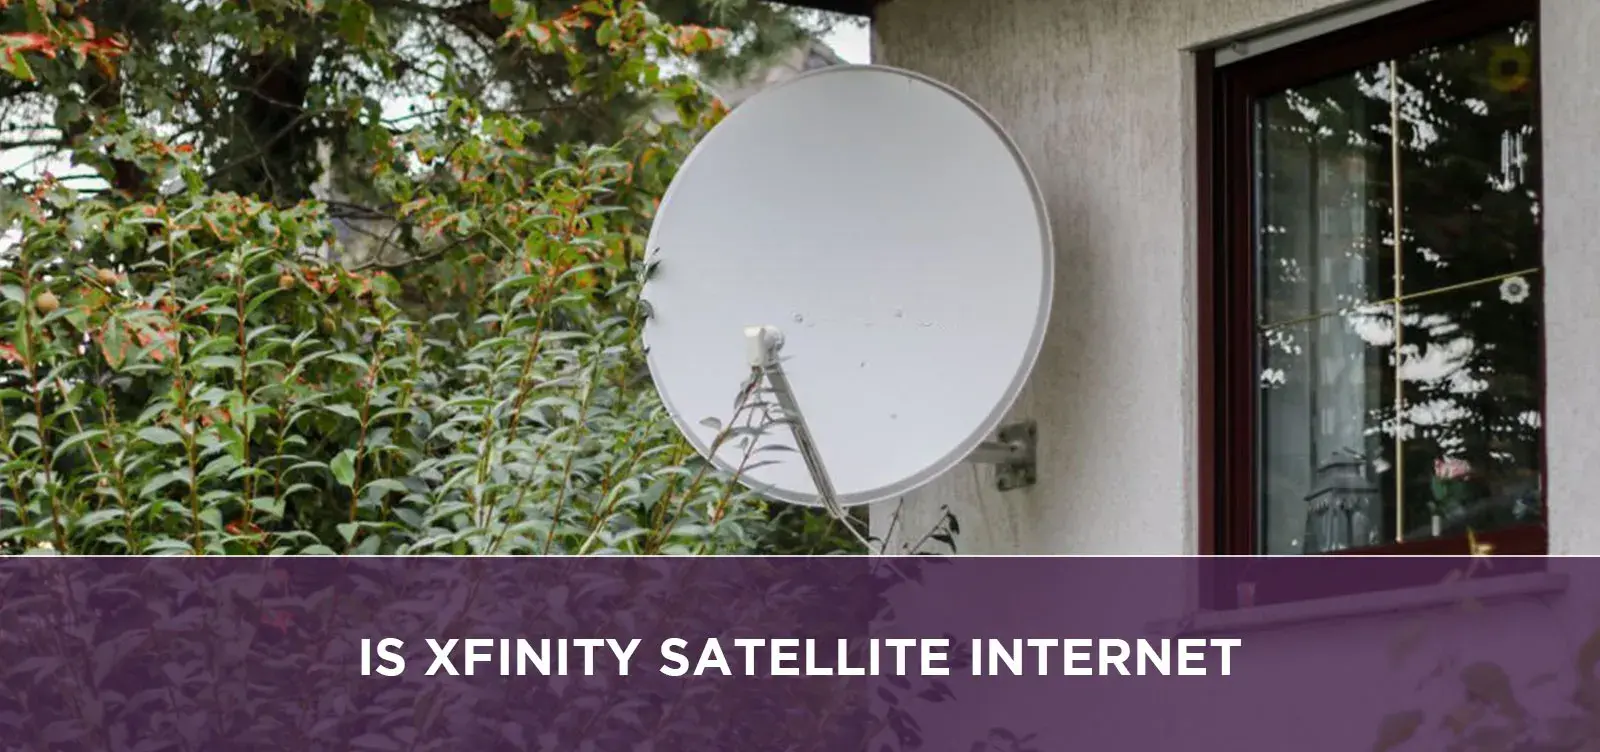 Is Xfinity Satellite Internet?